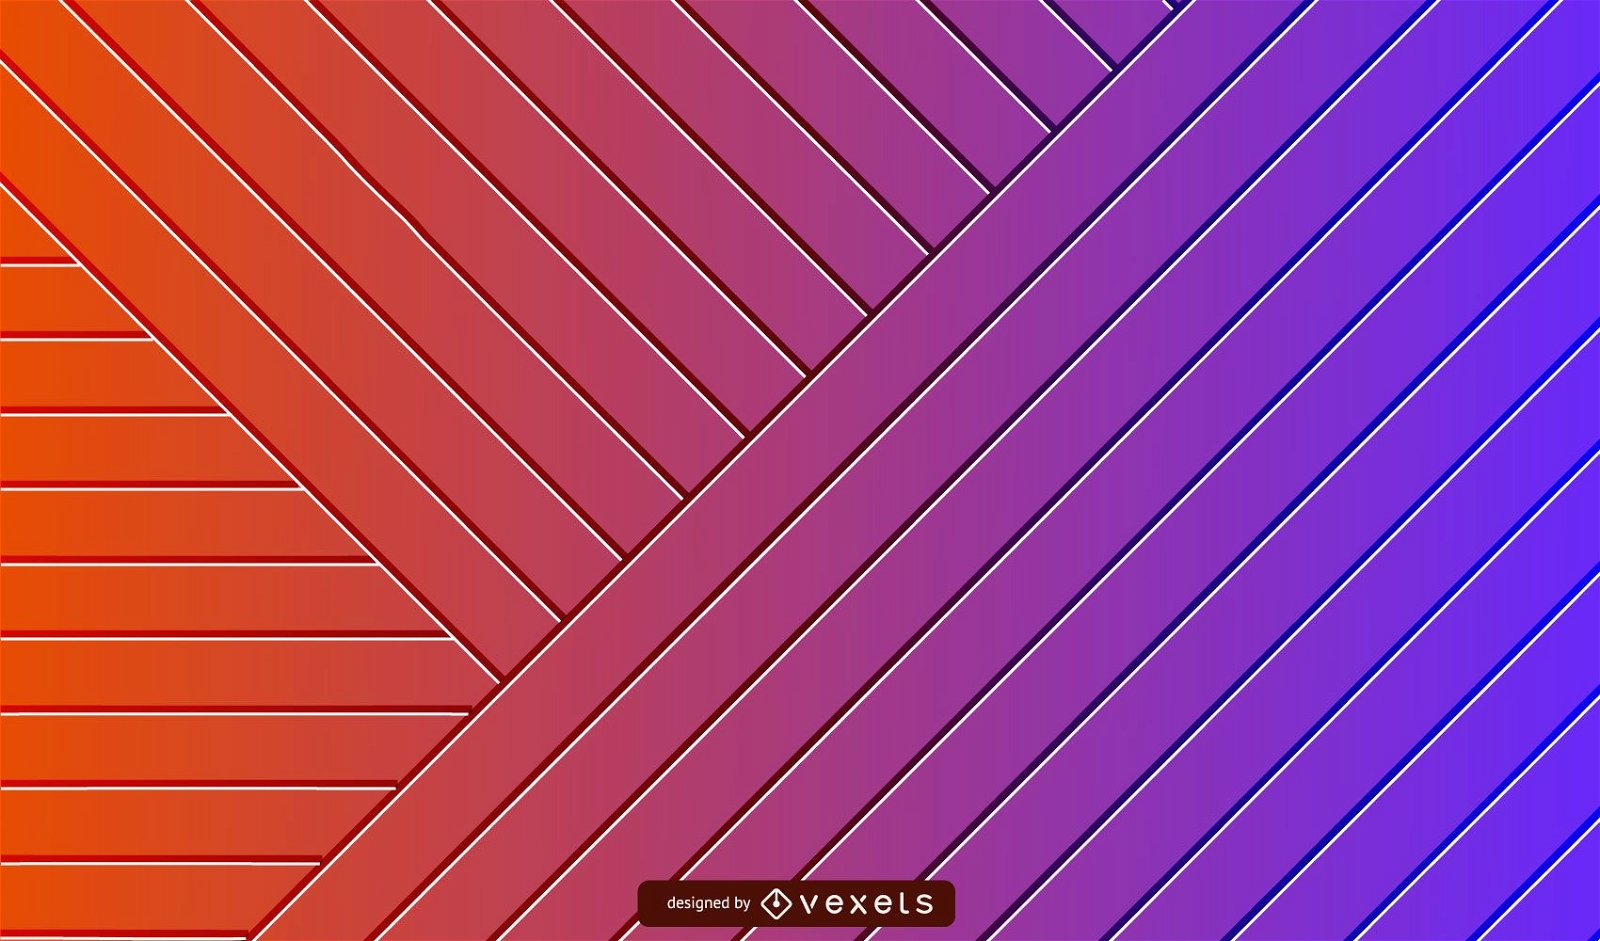 3D striped gradient background